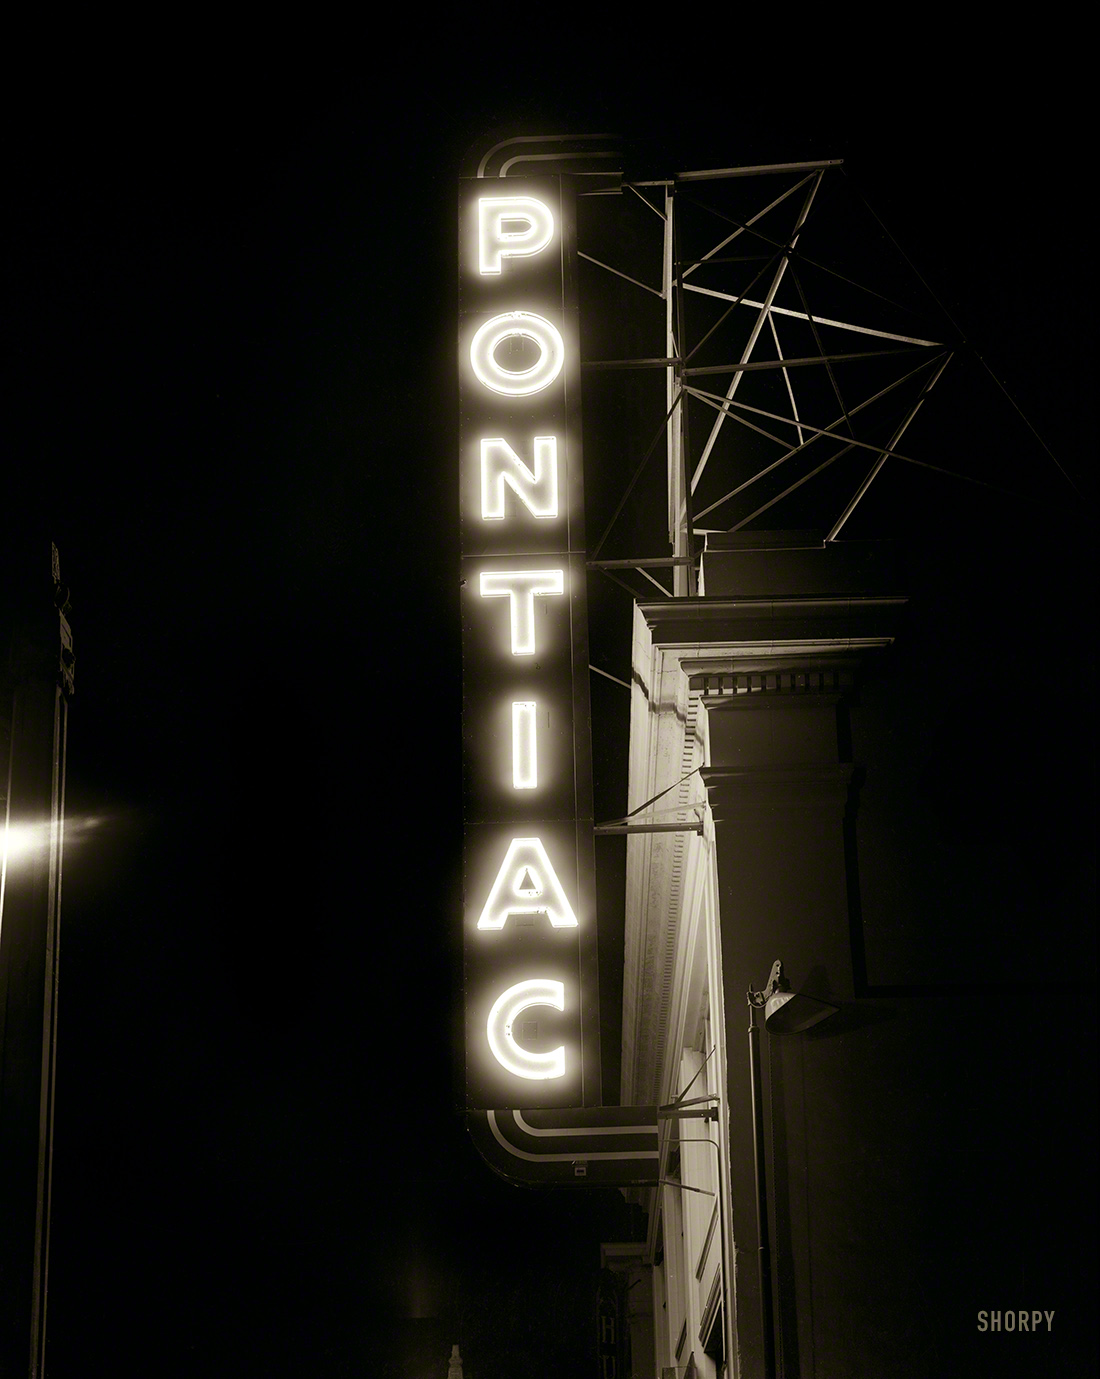 1948. "George Daniels Pontiac, Van Ness Avenue." The San Francisco car dealer&shy;ship whose interior we've seen here. 8x10 acetate negative. View full size.